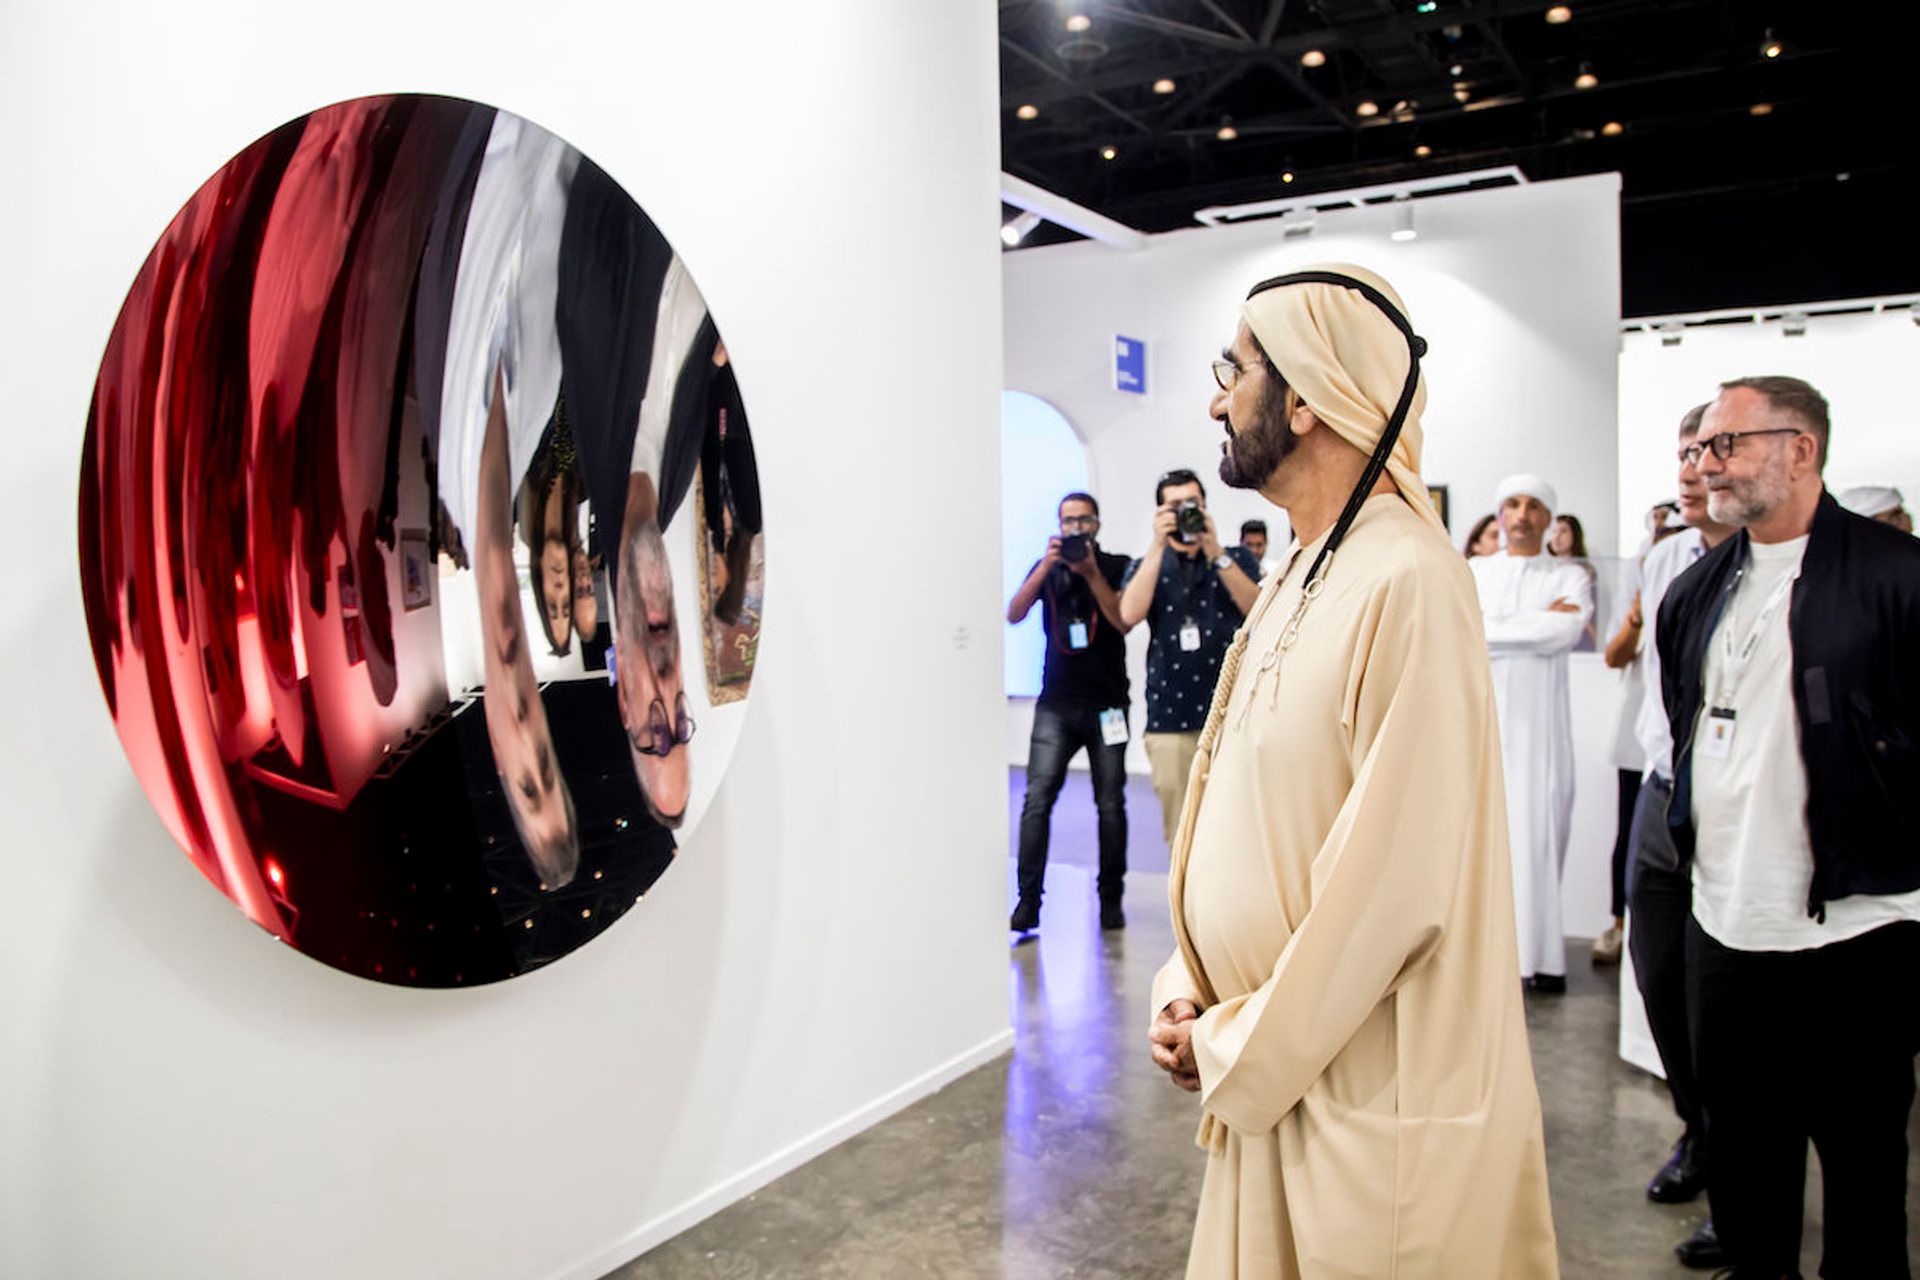 Sheikh Mohammed bin Rashid Al Maktoum, the vice president and prime minister of the United Arab Emirates and the ruler of Dubai, visits the 2019 edition of Art Dubai. Courtesy Art Dubai